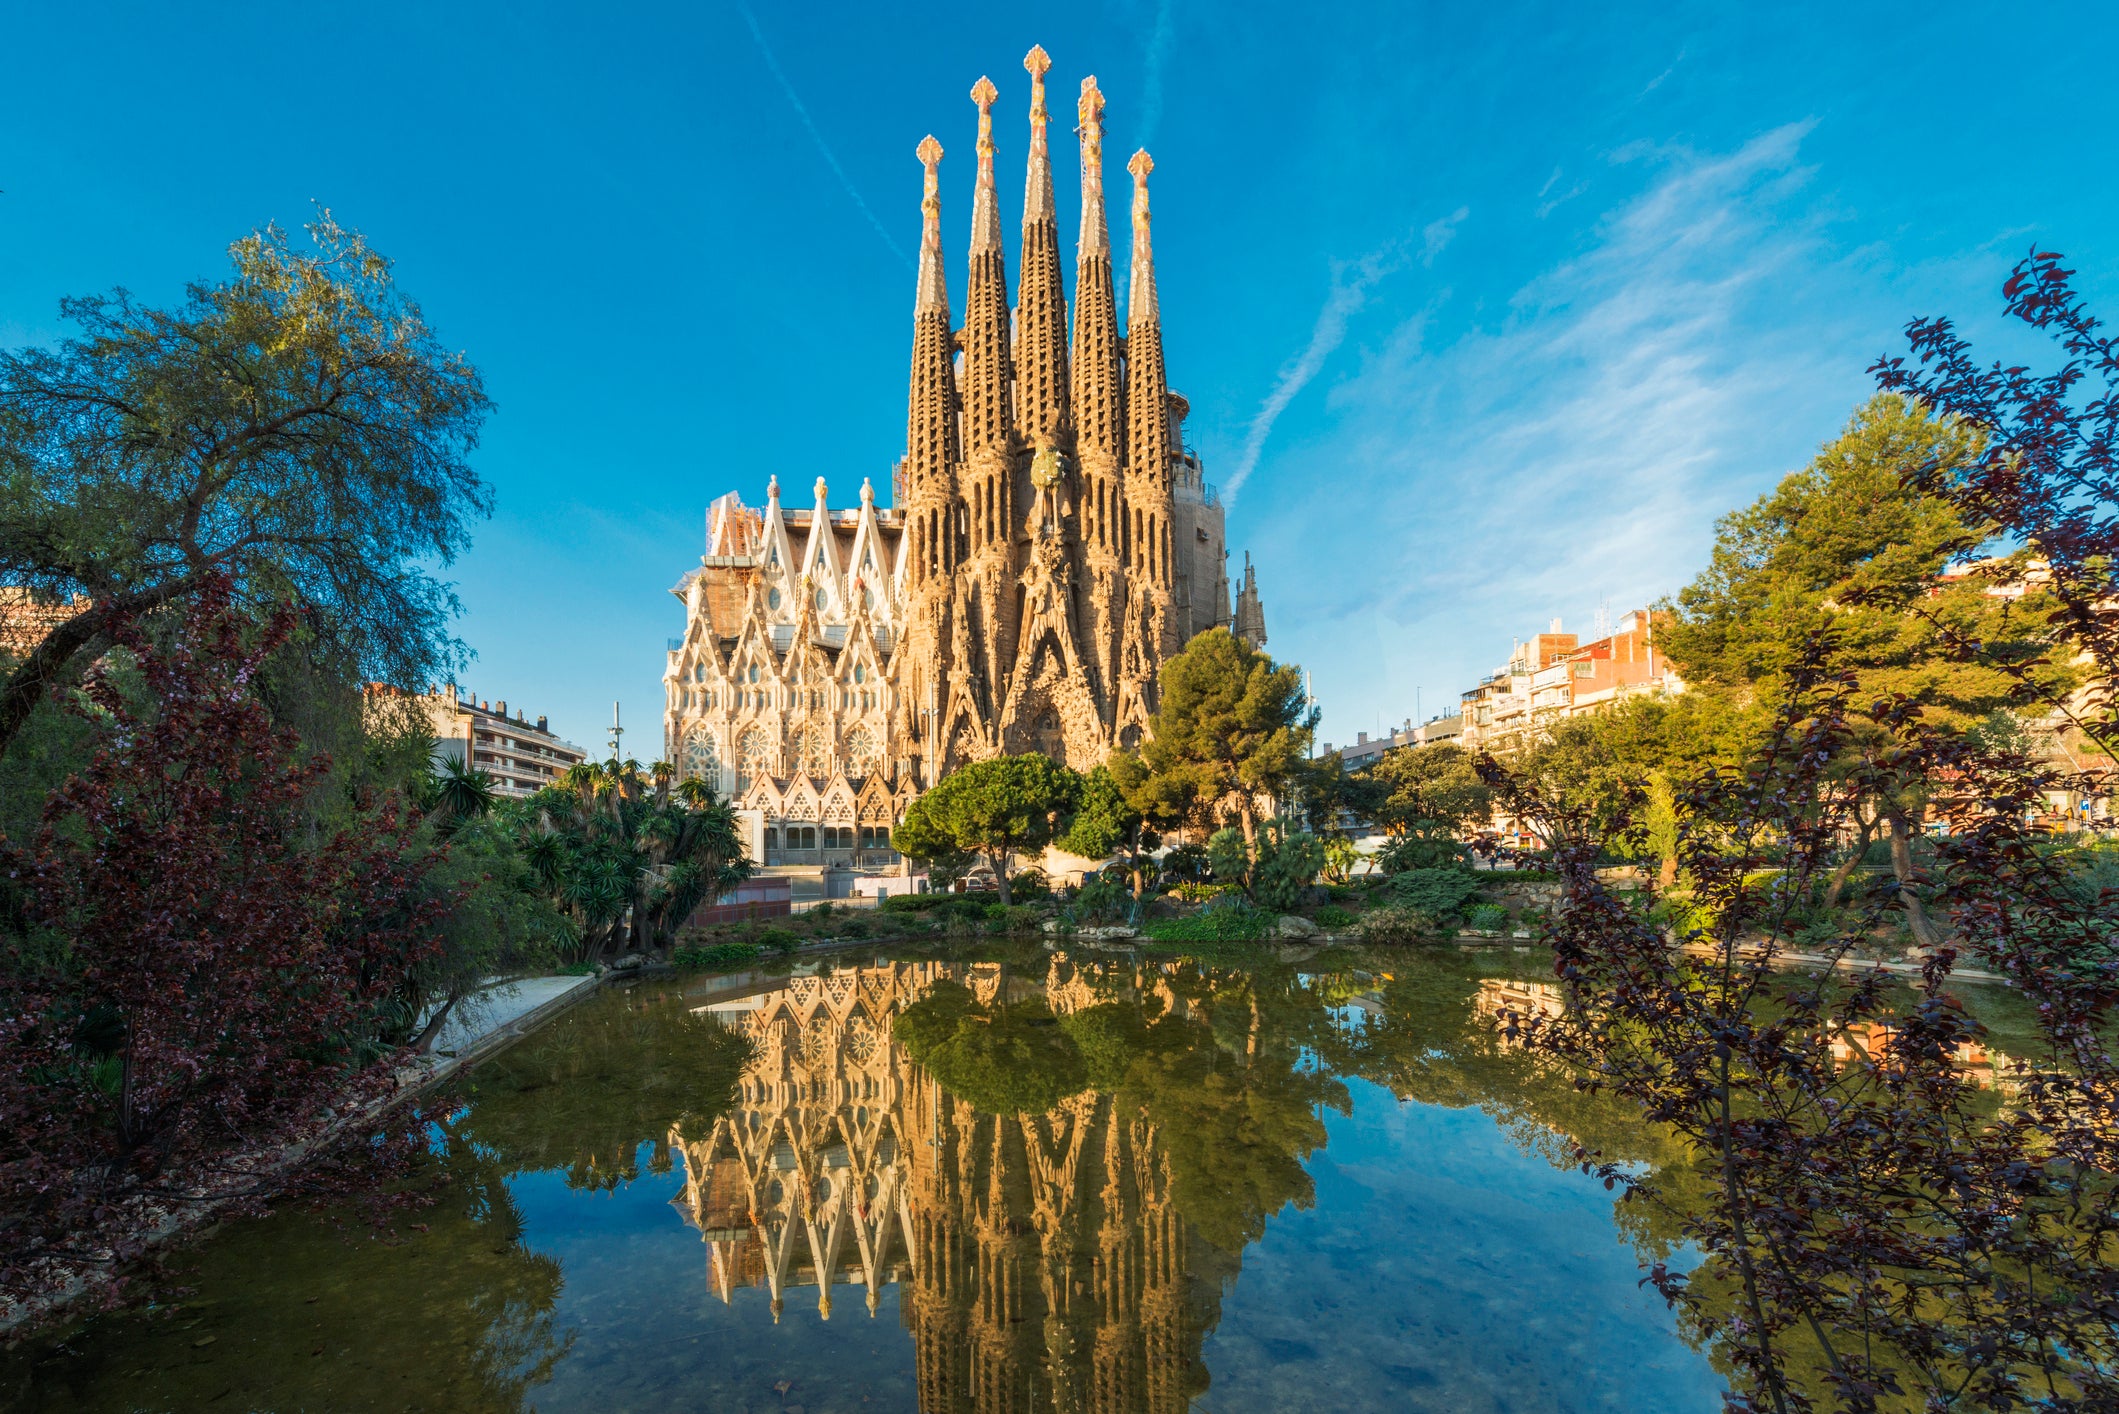 Sagrada Familia (Photo by Tanatat pongphibool ,thailand/Getty Images)